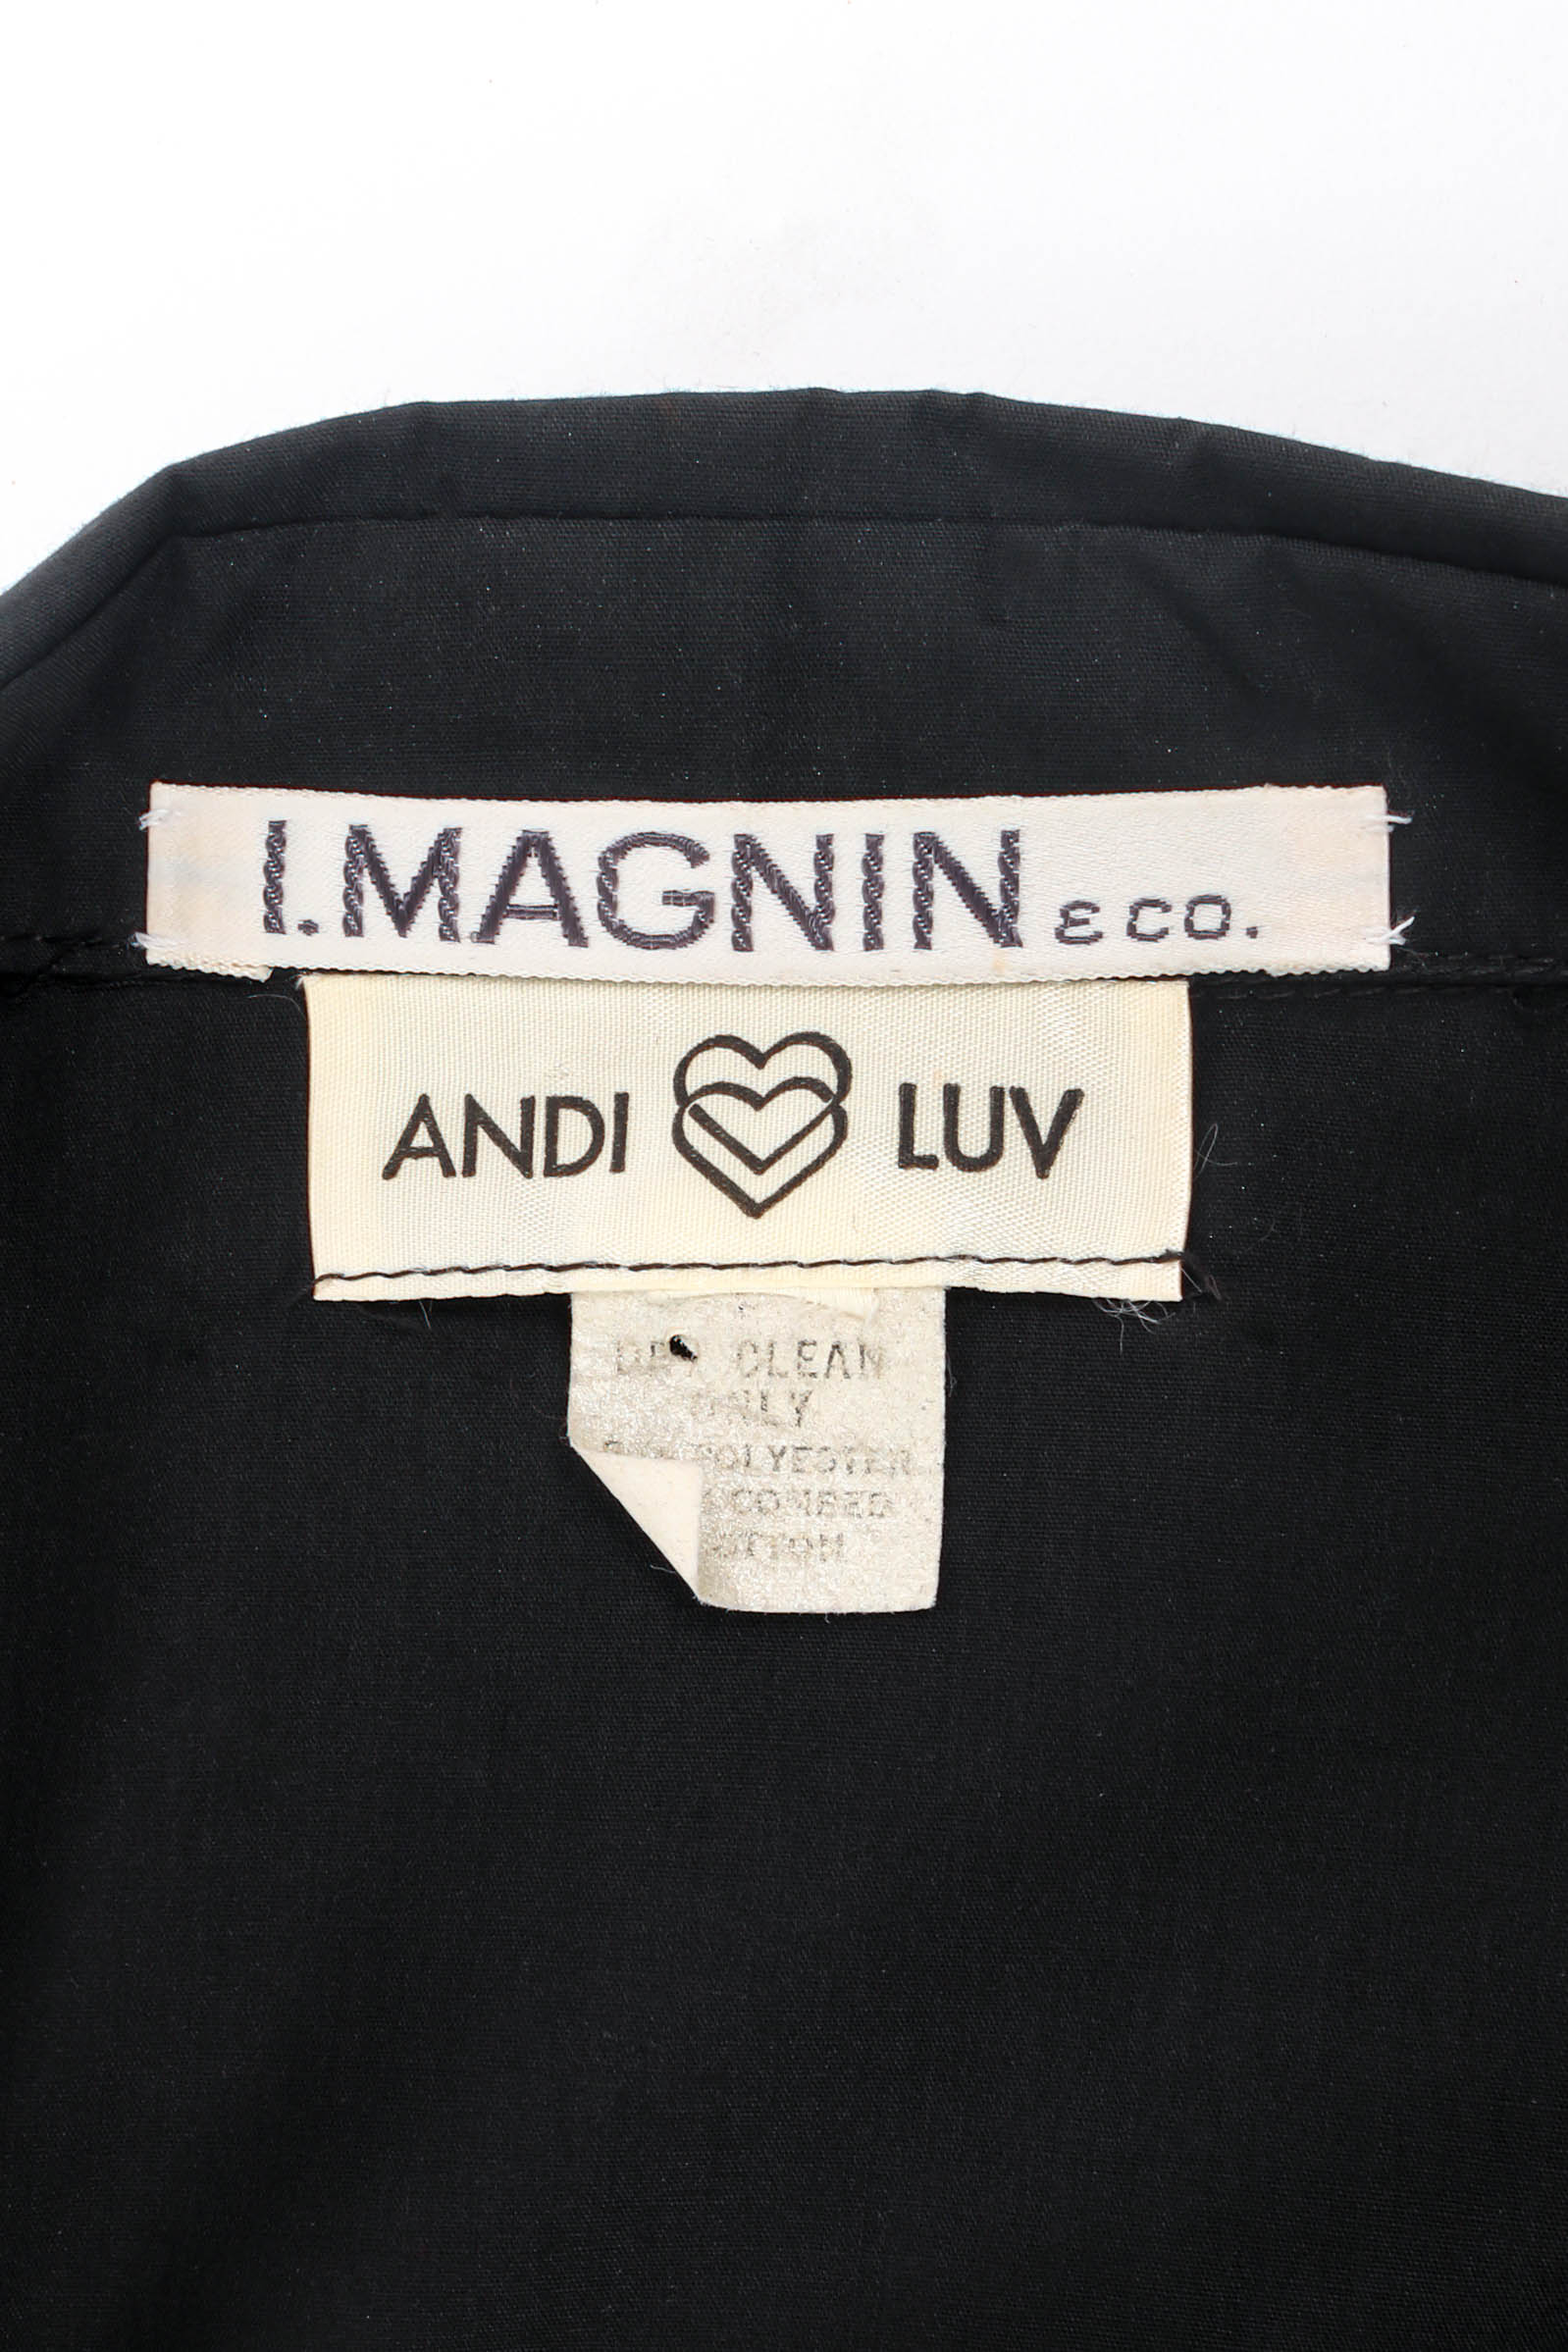 Vintage Andi Luv Jeweled Victorian Art Print Shirt brand/care label @ Recess LA